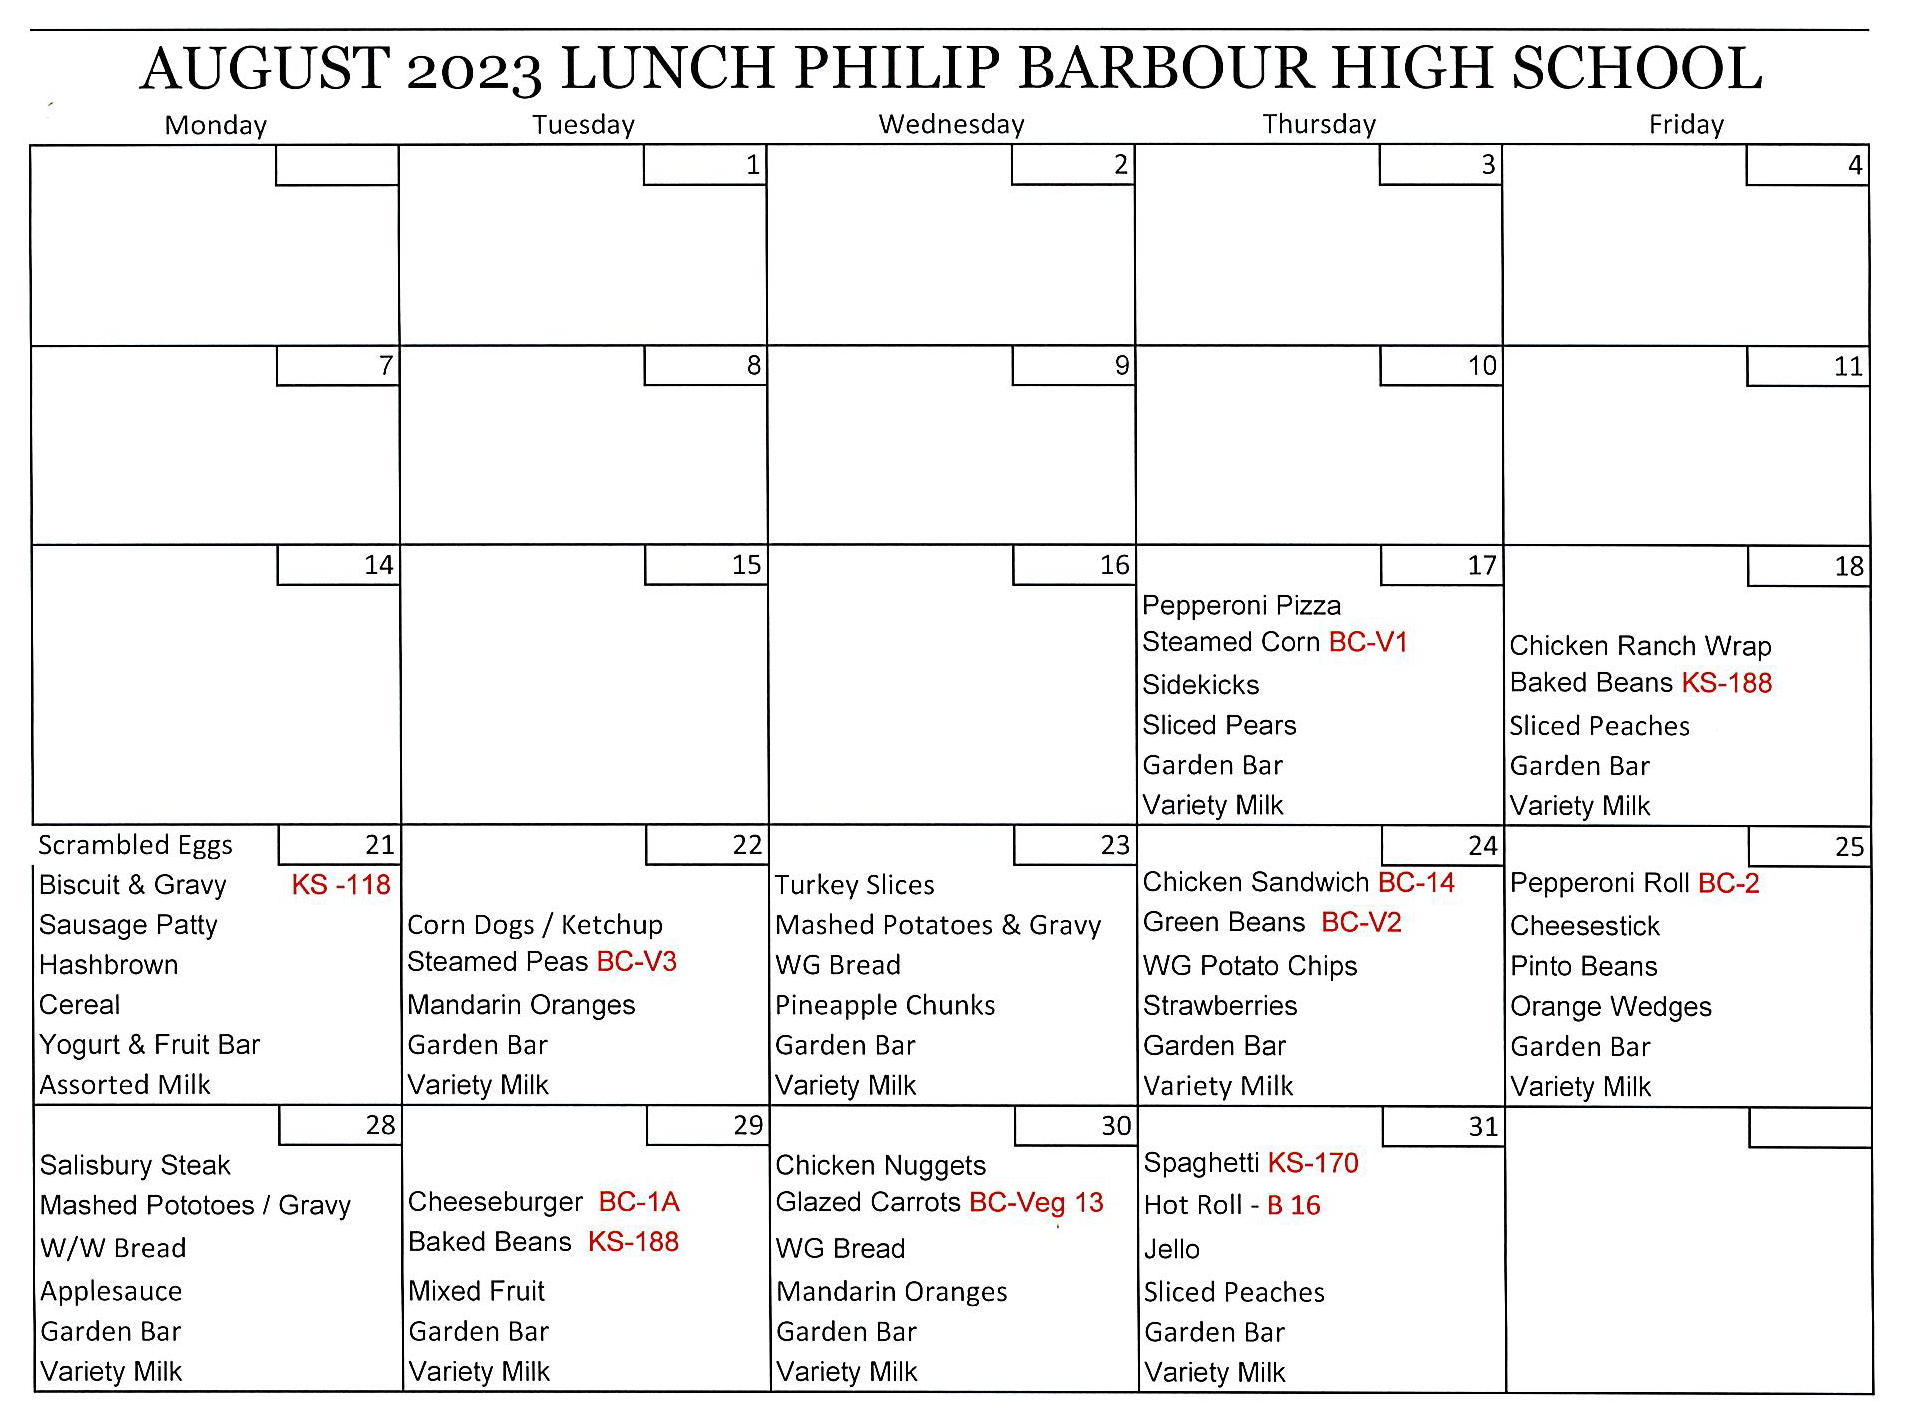 August 2022 High School Lunch Menu